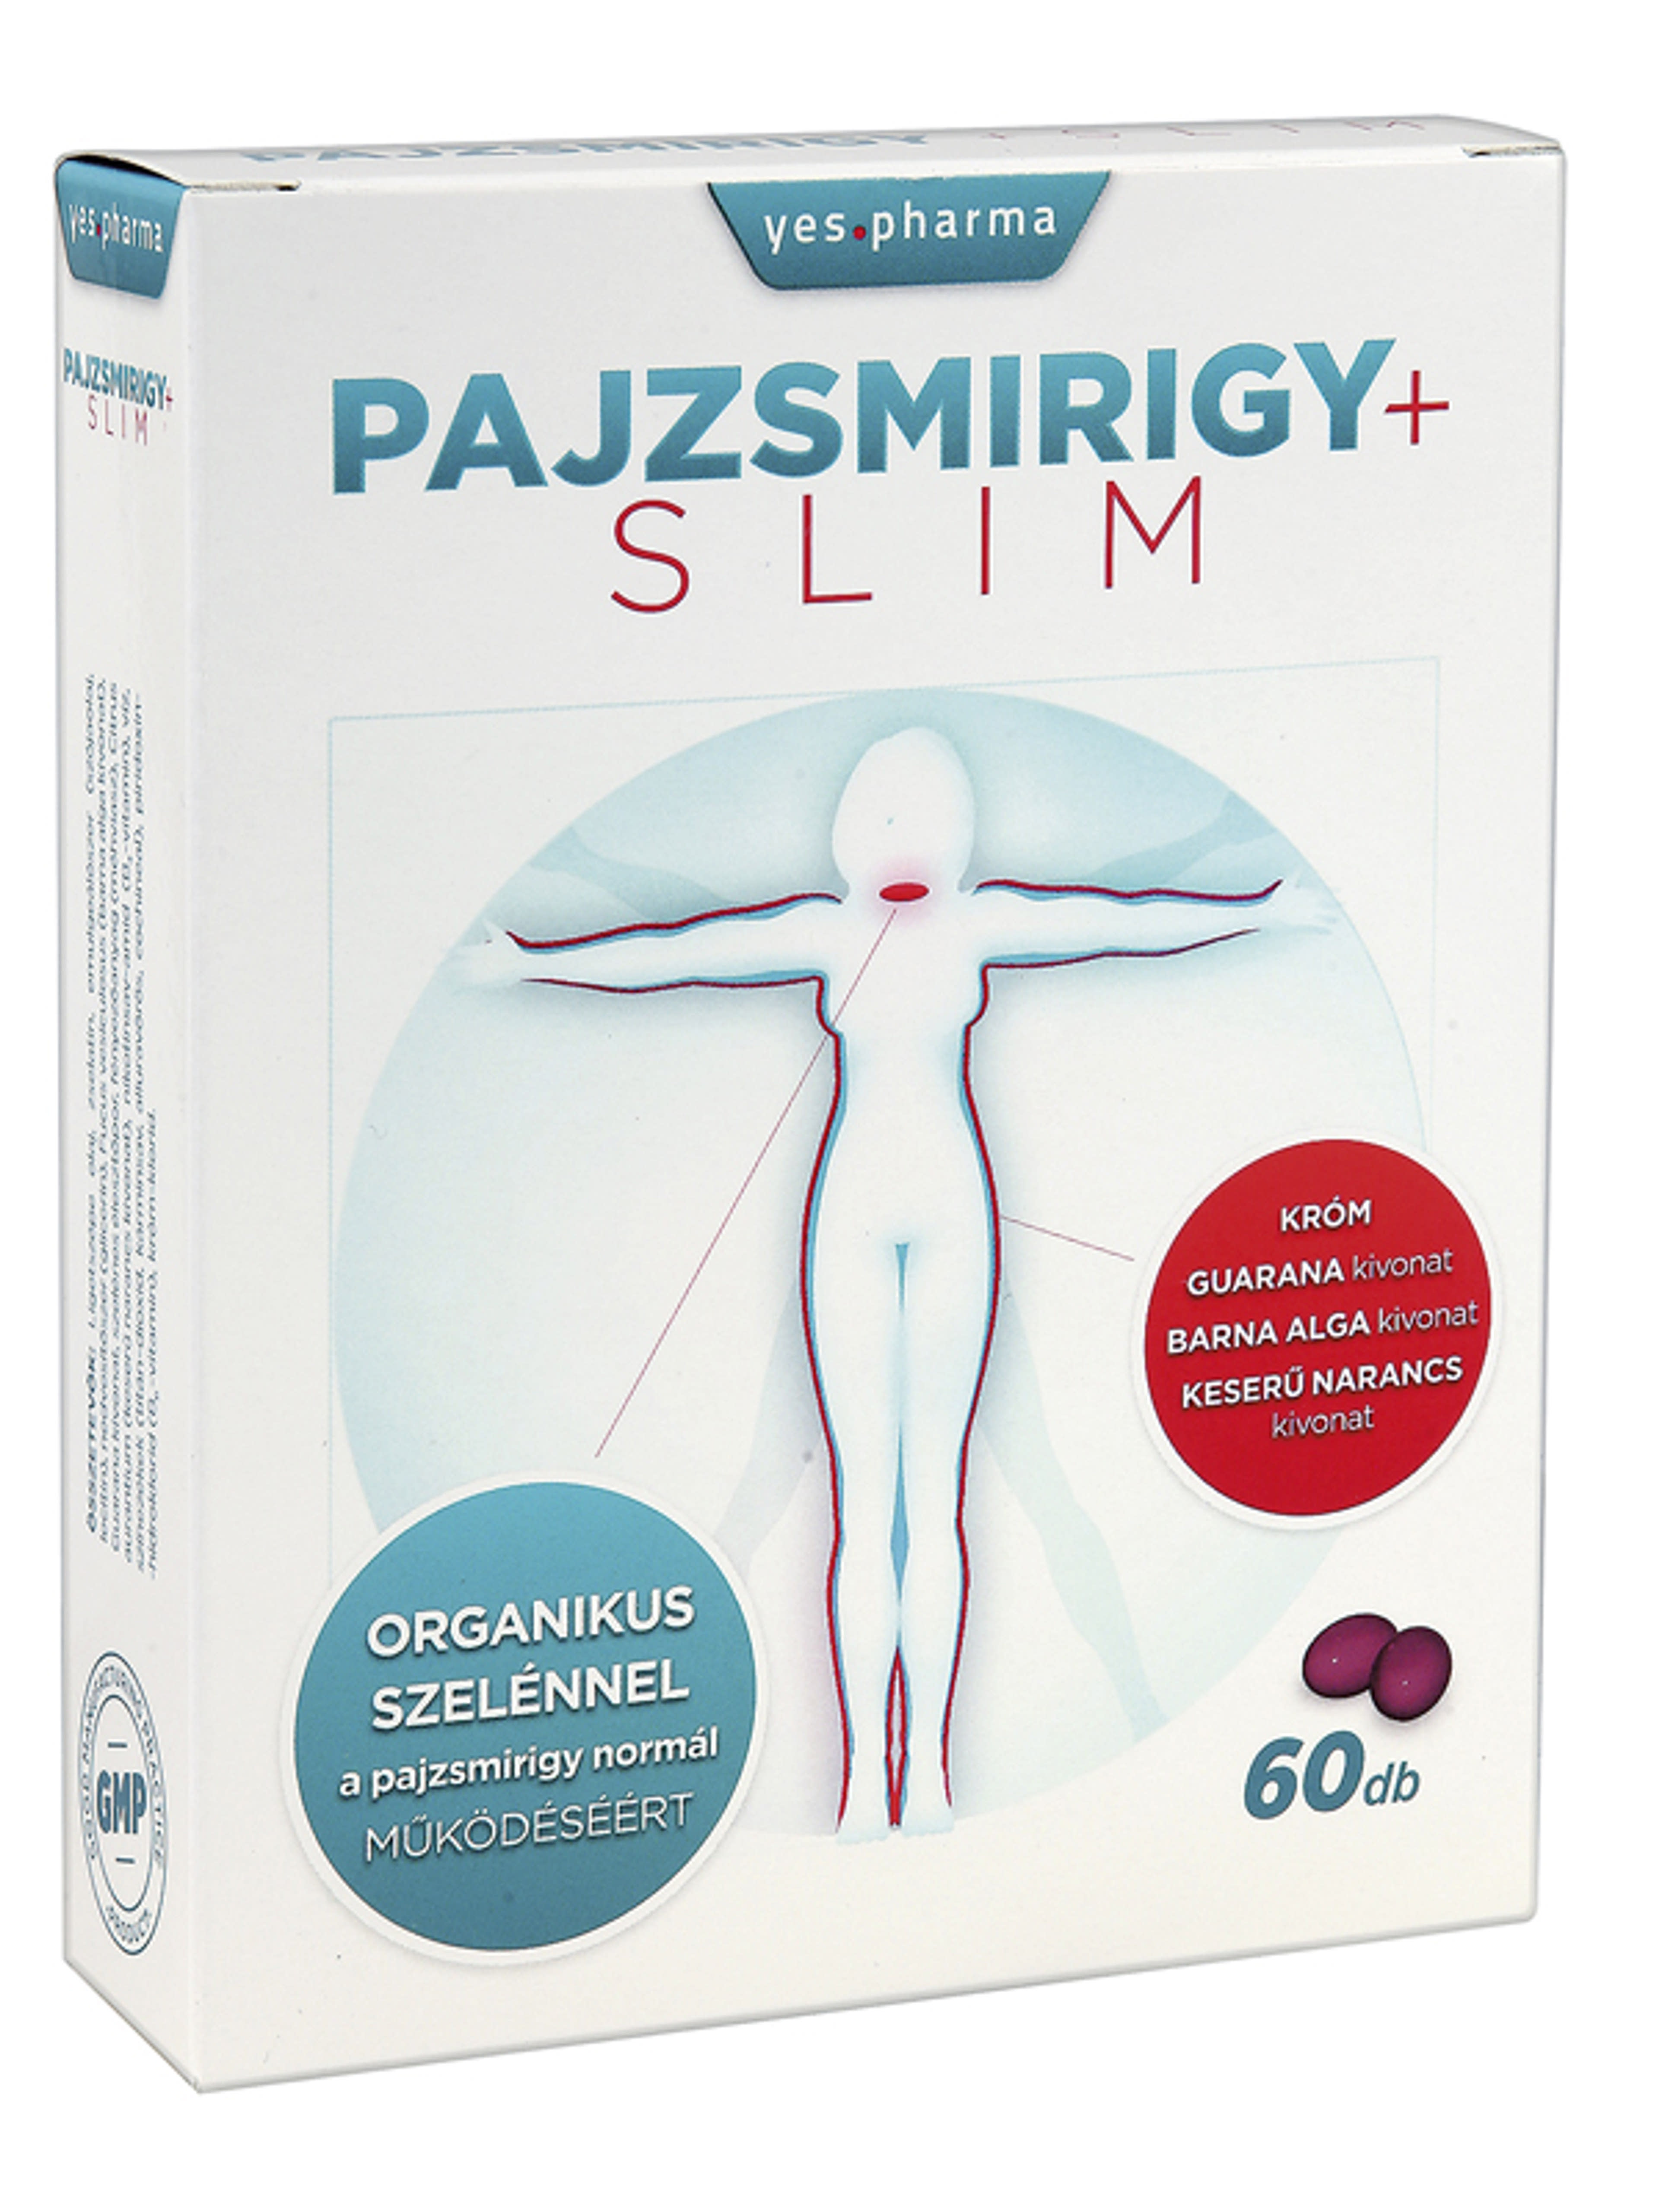 Yes Pharma Pajzsmirigy+ Slim Kapszula - 60 db-1